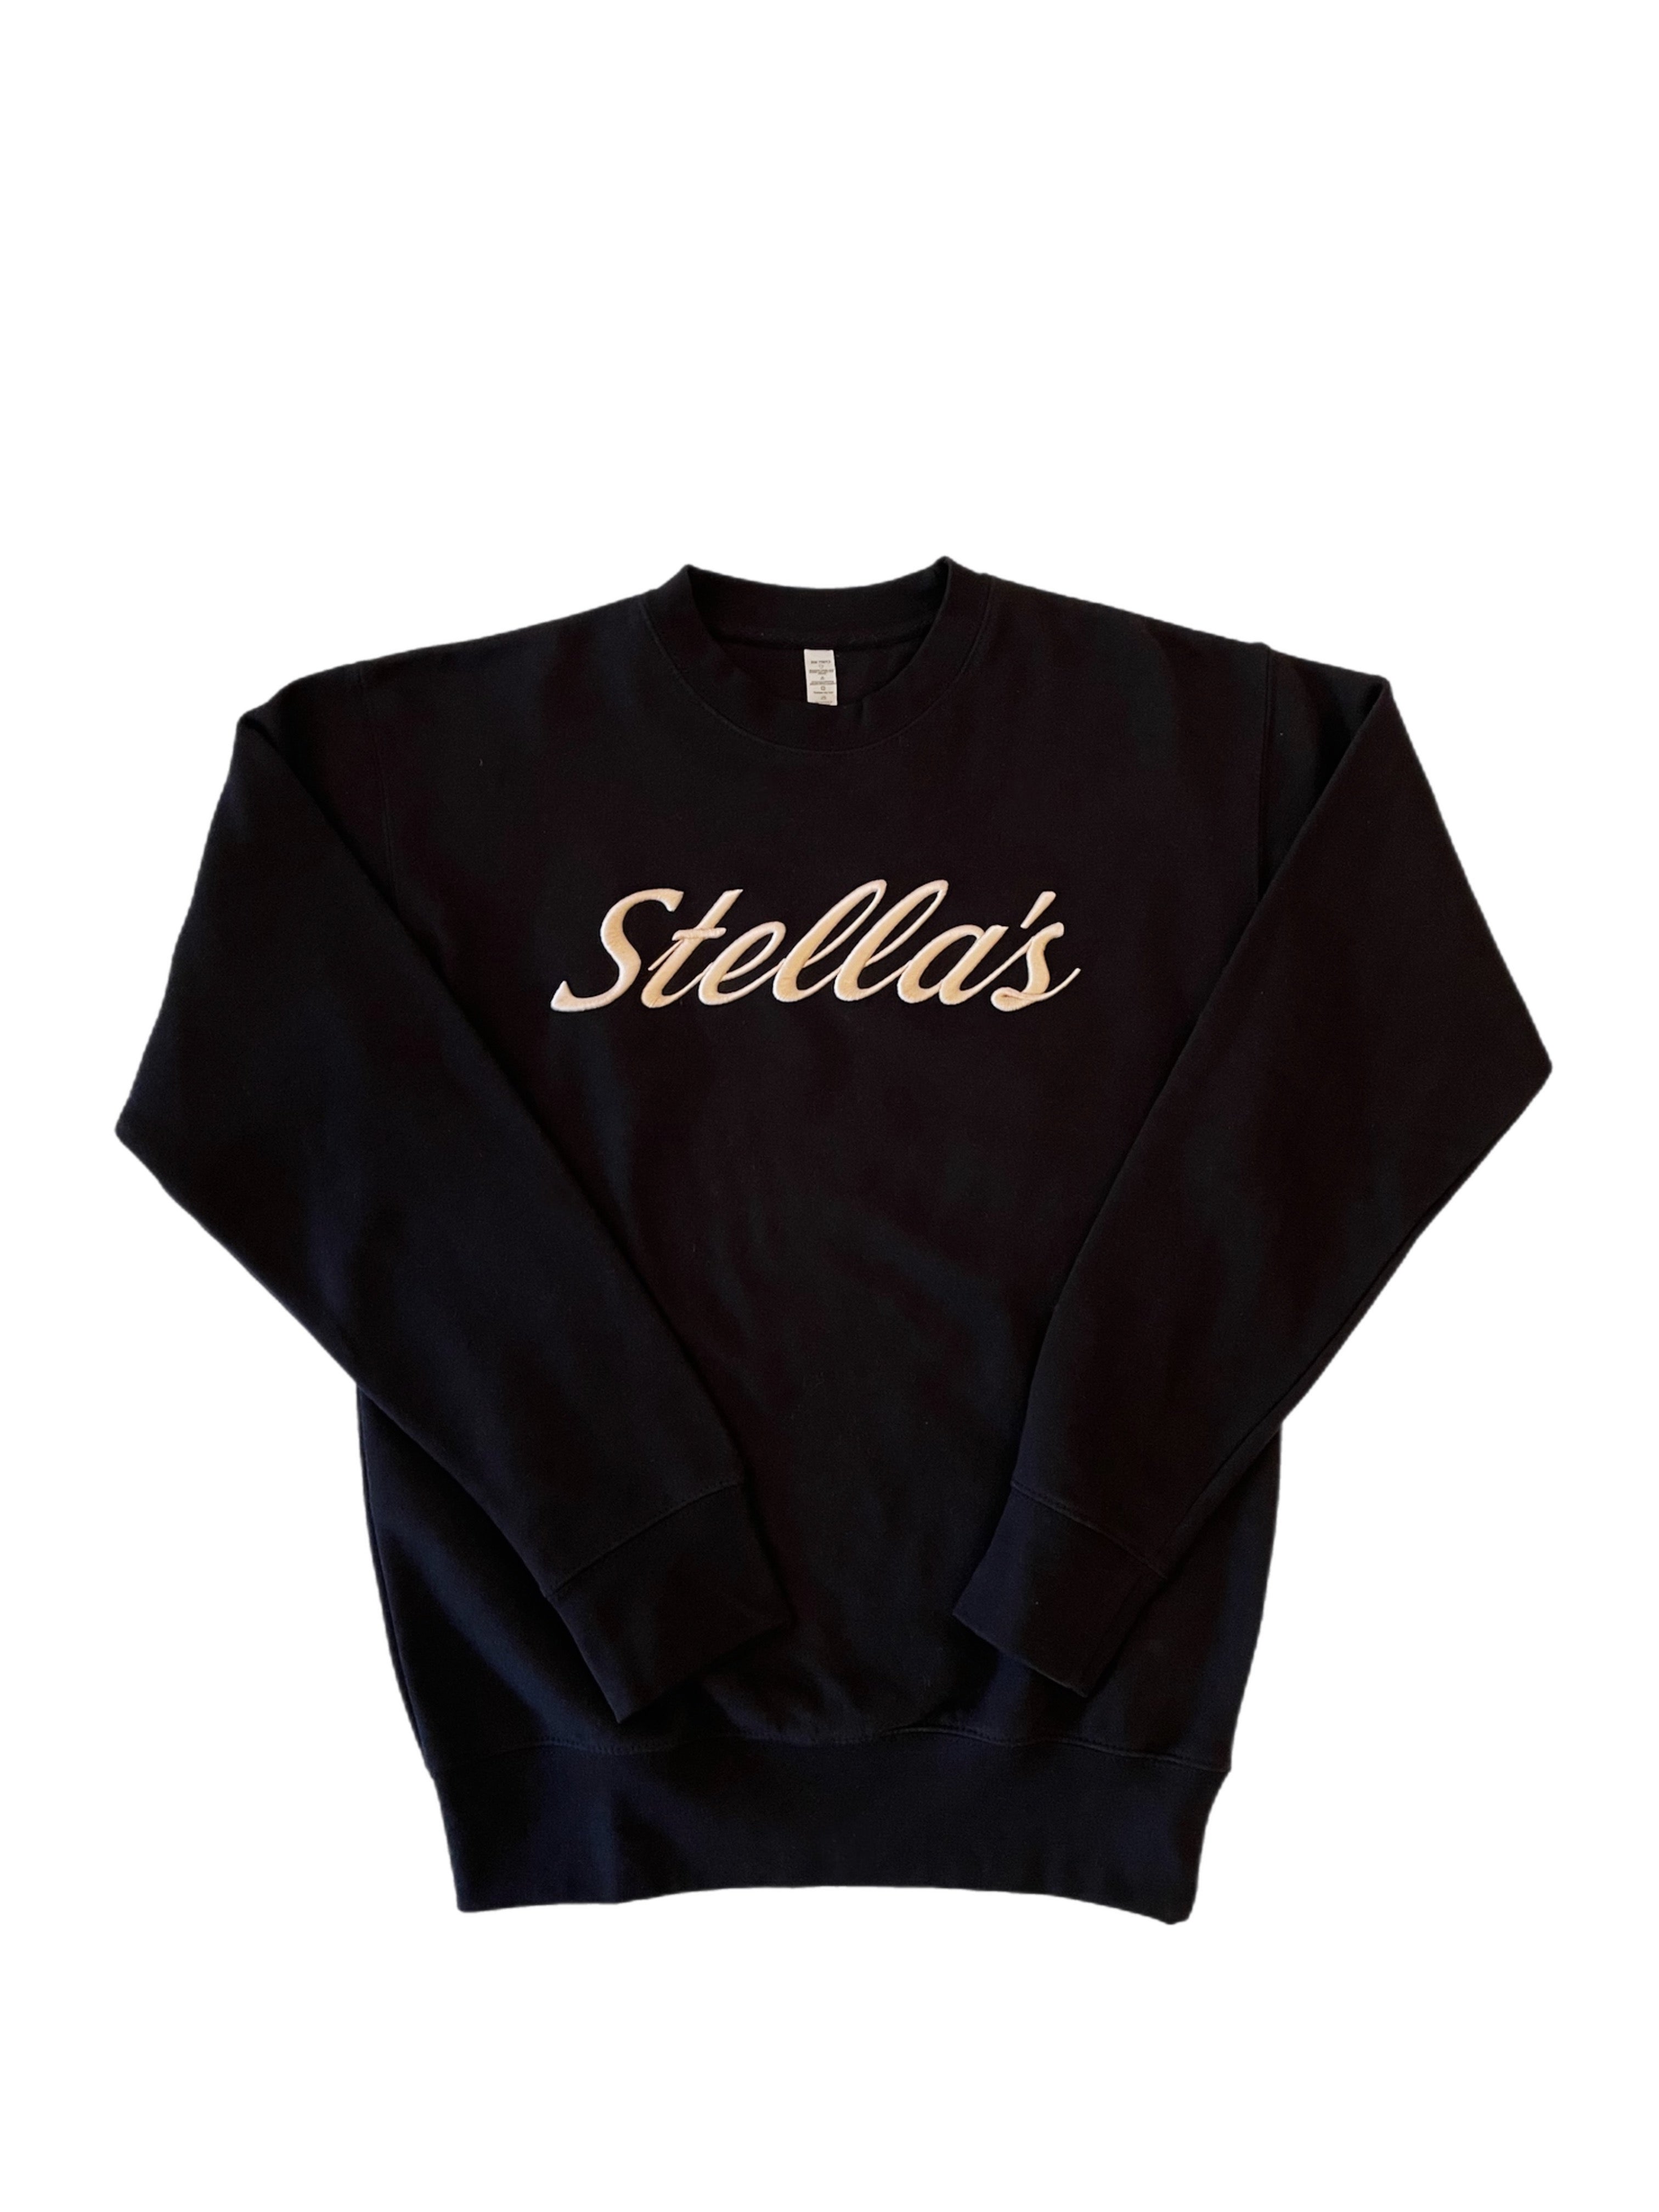 Stella's Embroidered Crewneck Sweatshirt Black with Cream